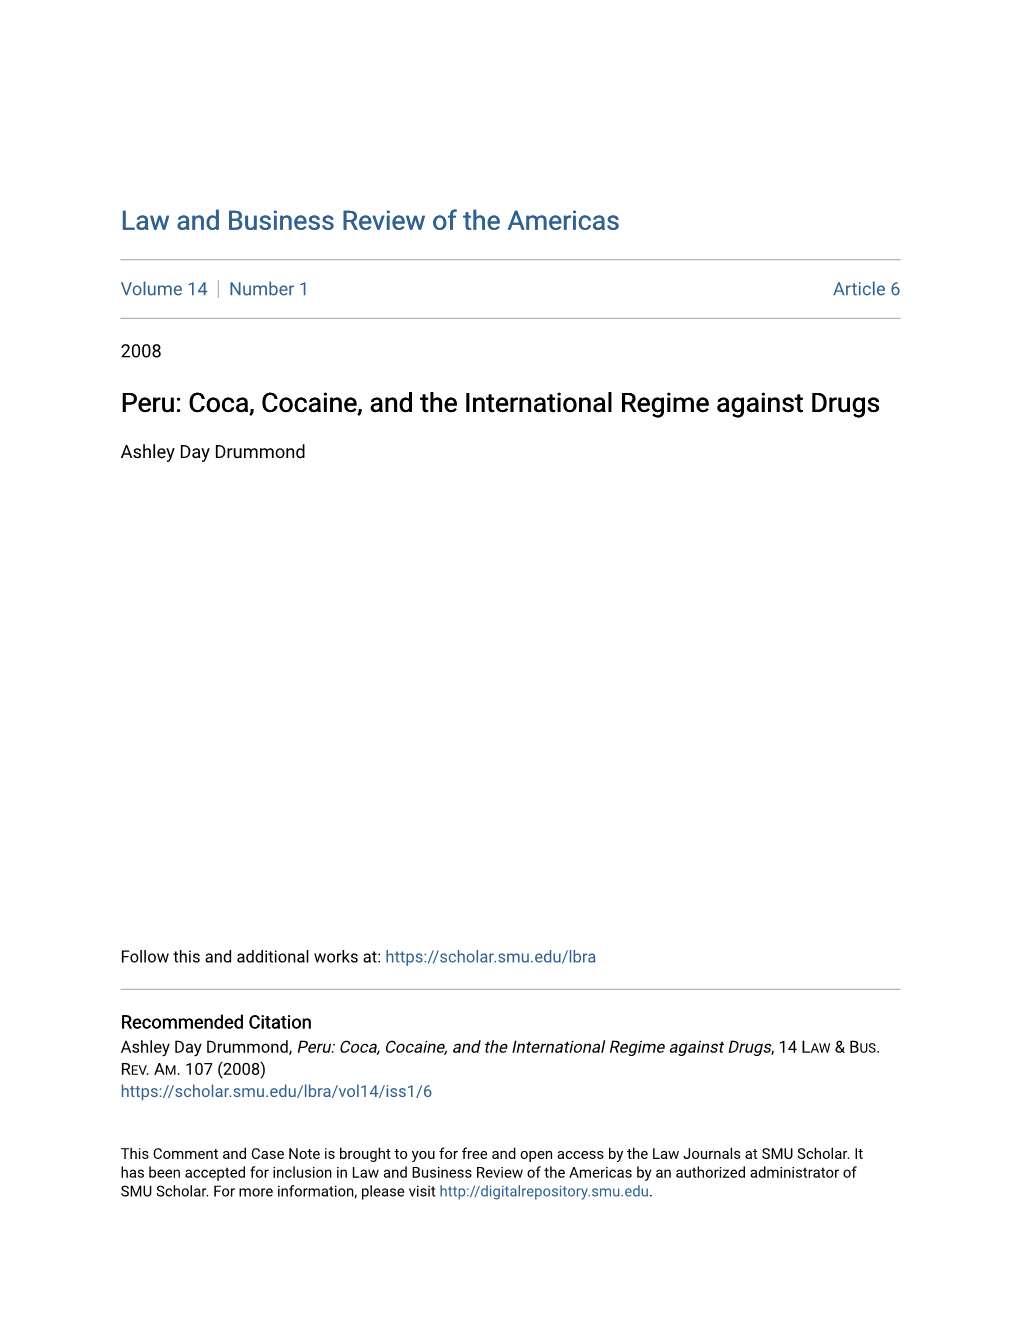 Peru: Coca, Cocaine, and the International Regime Against Drugs